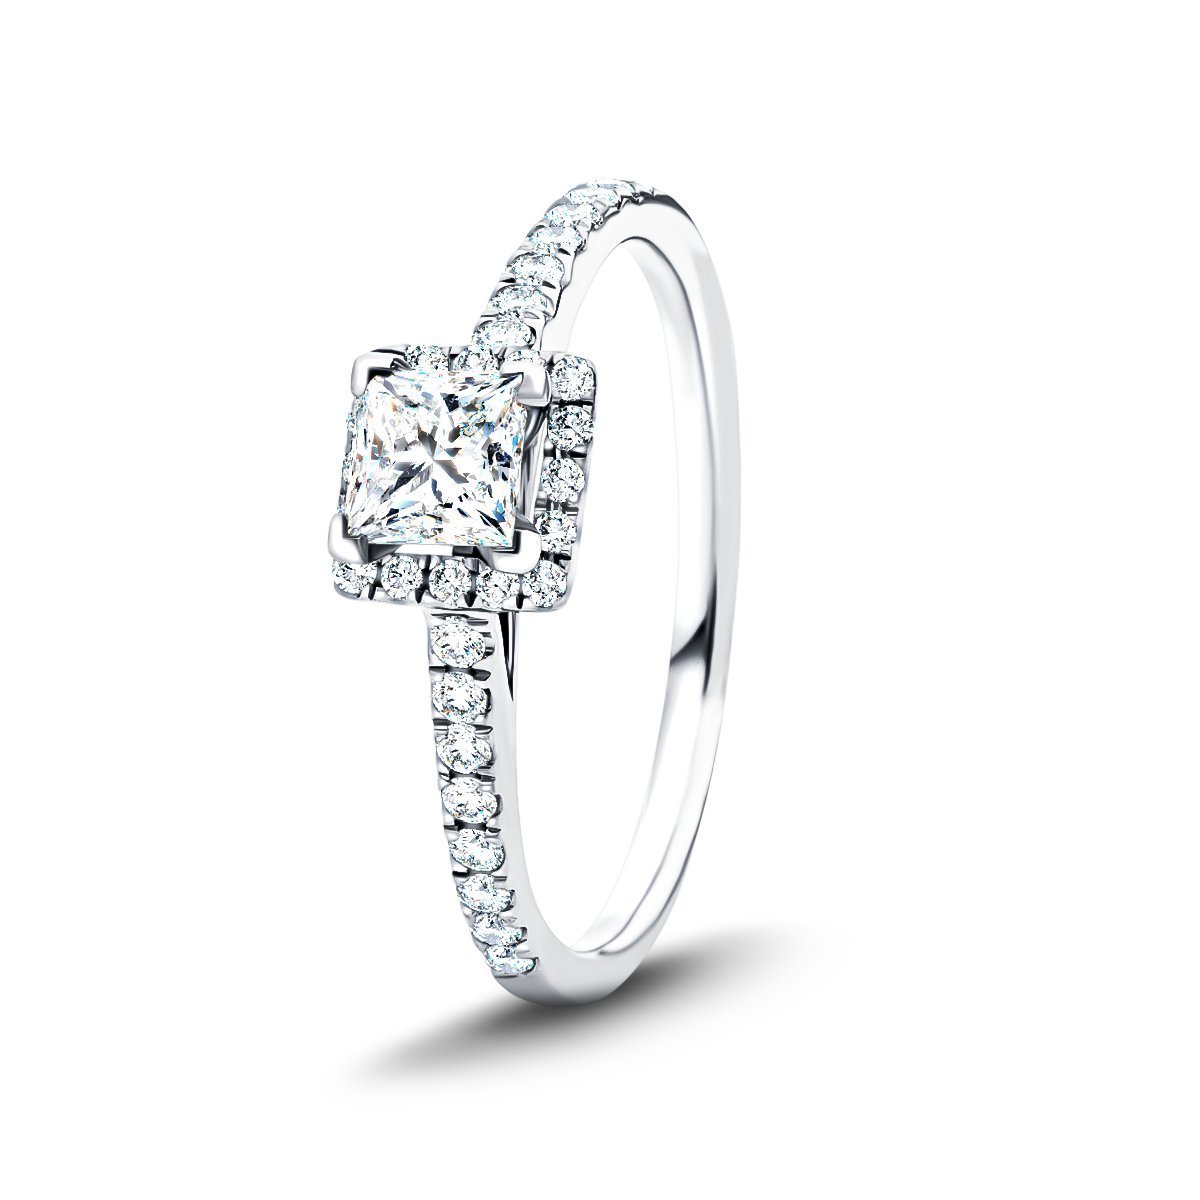 Gorgeous Princess Cut Diamond Engagement Rings | All Diamond